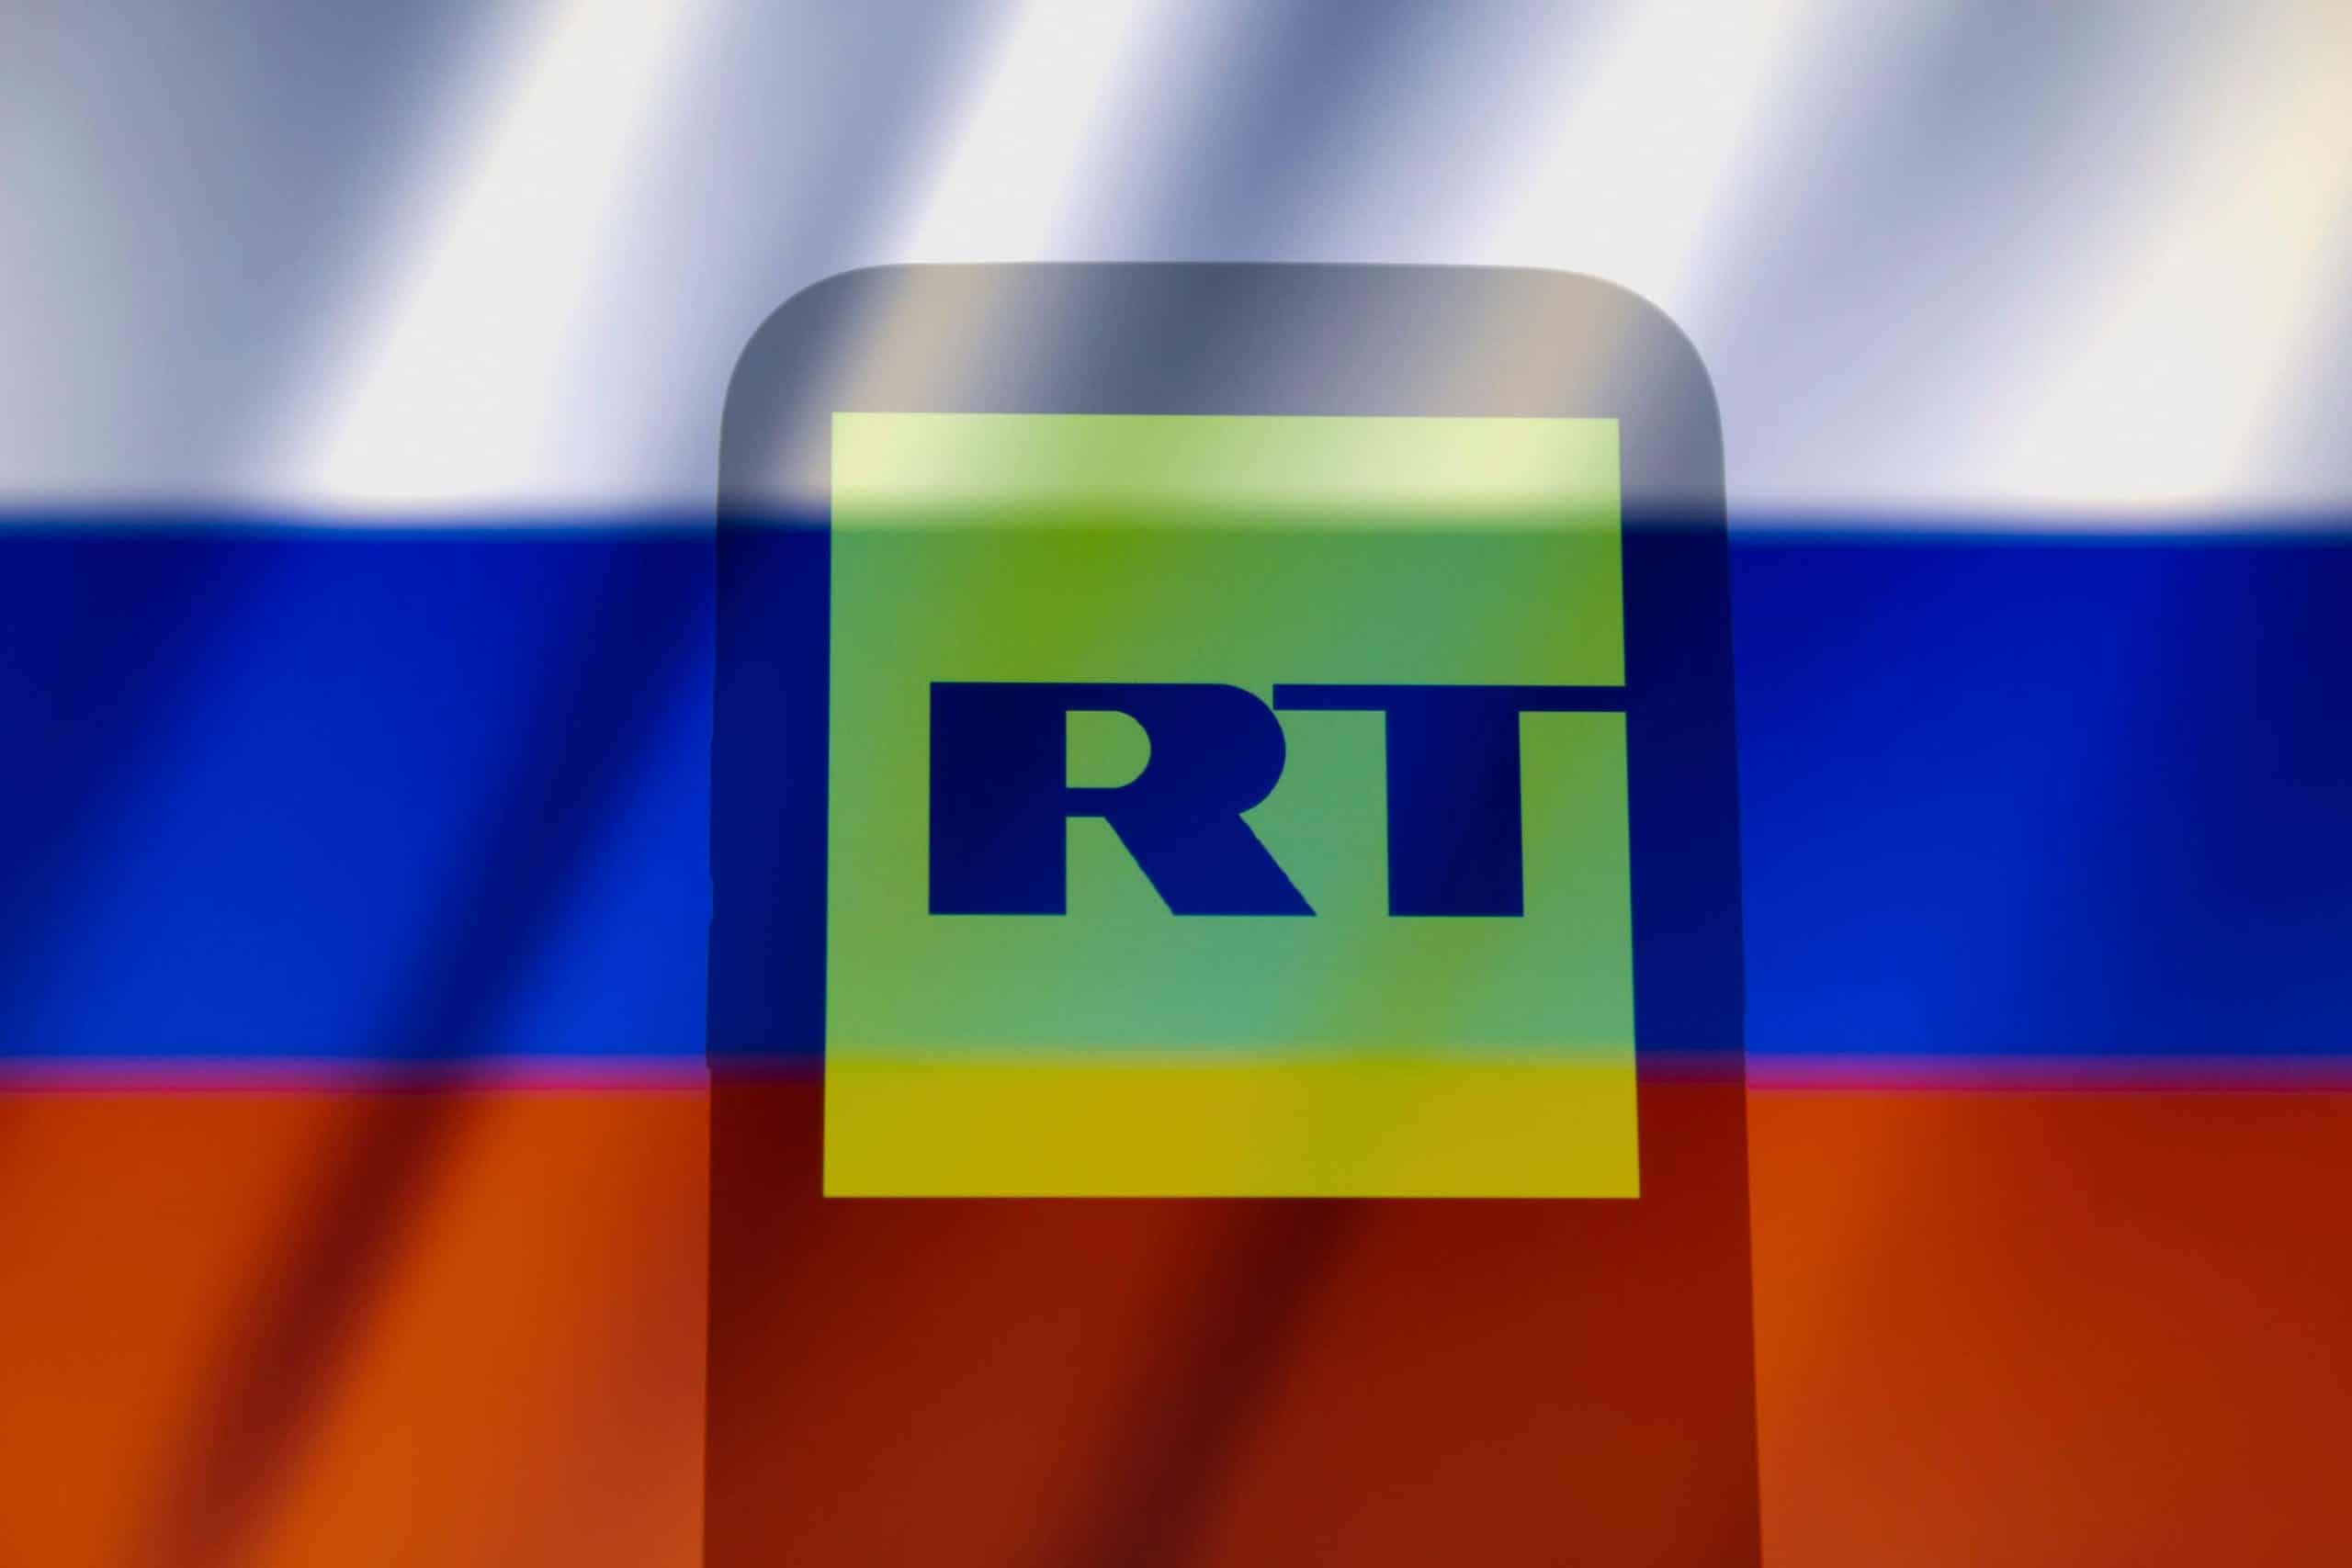 Kremlin-backed RT has license revoked by Ofcom